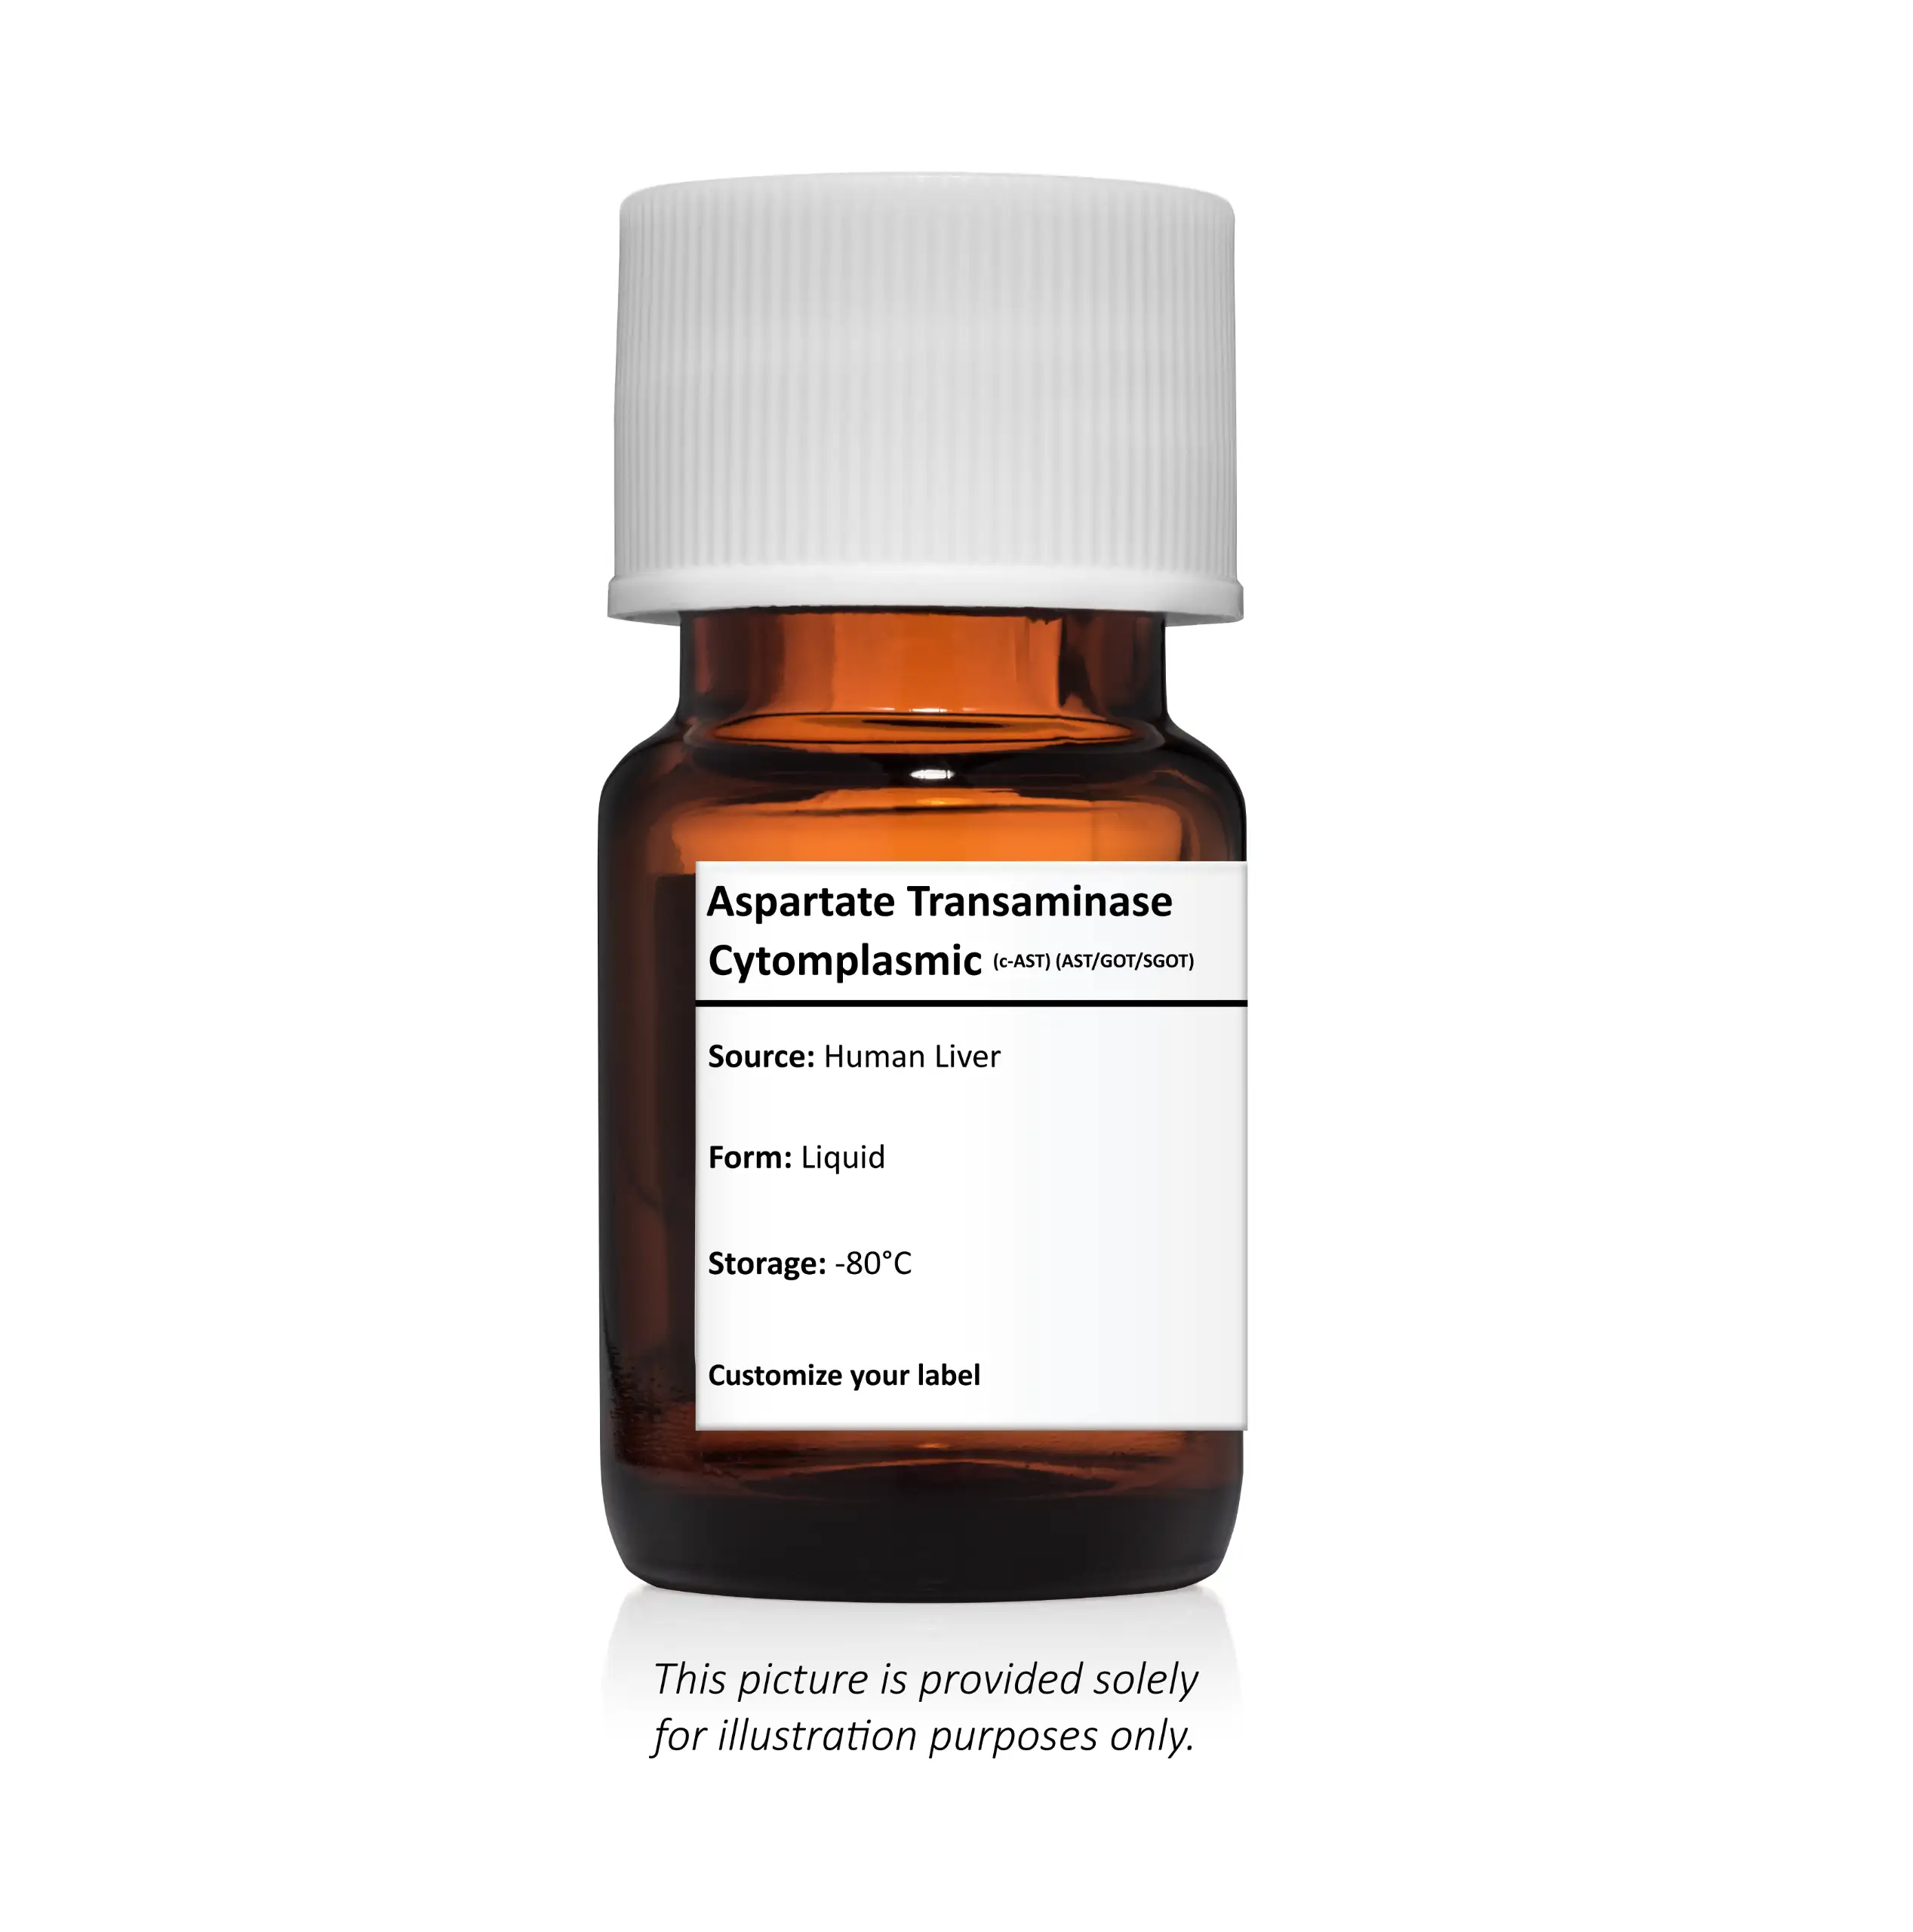 Aspartate Transaminase Cytoplasmic (c-AST) (AST/GOT/SGOT)